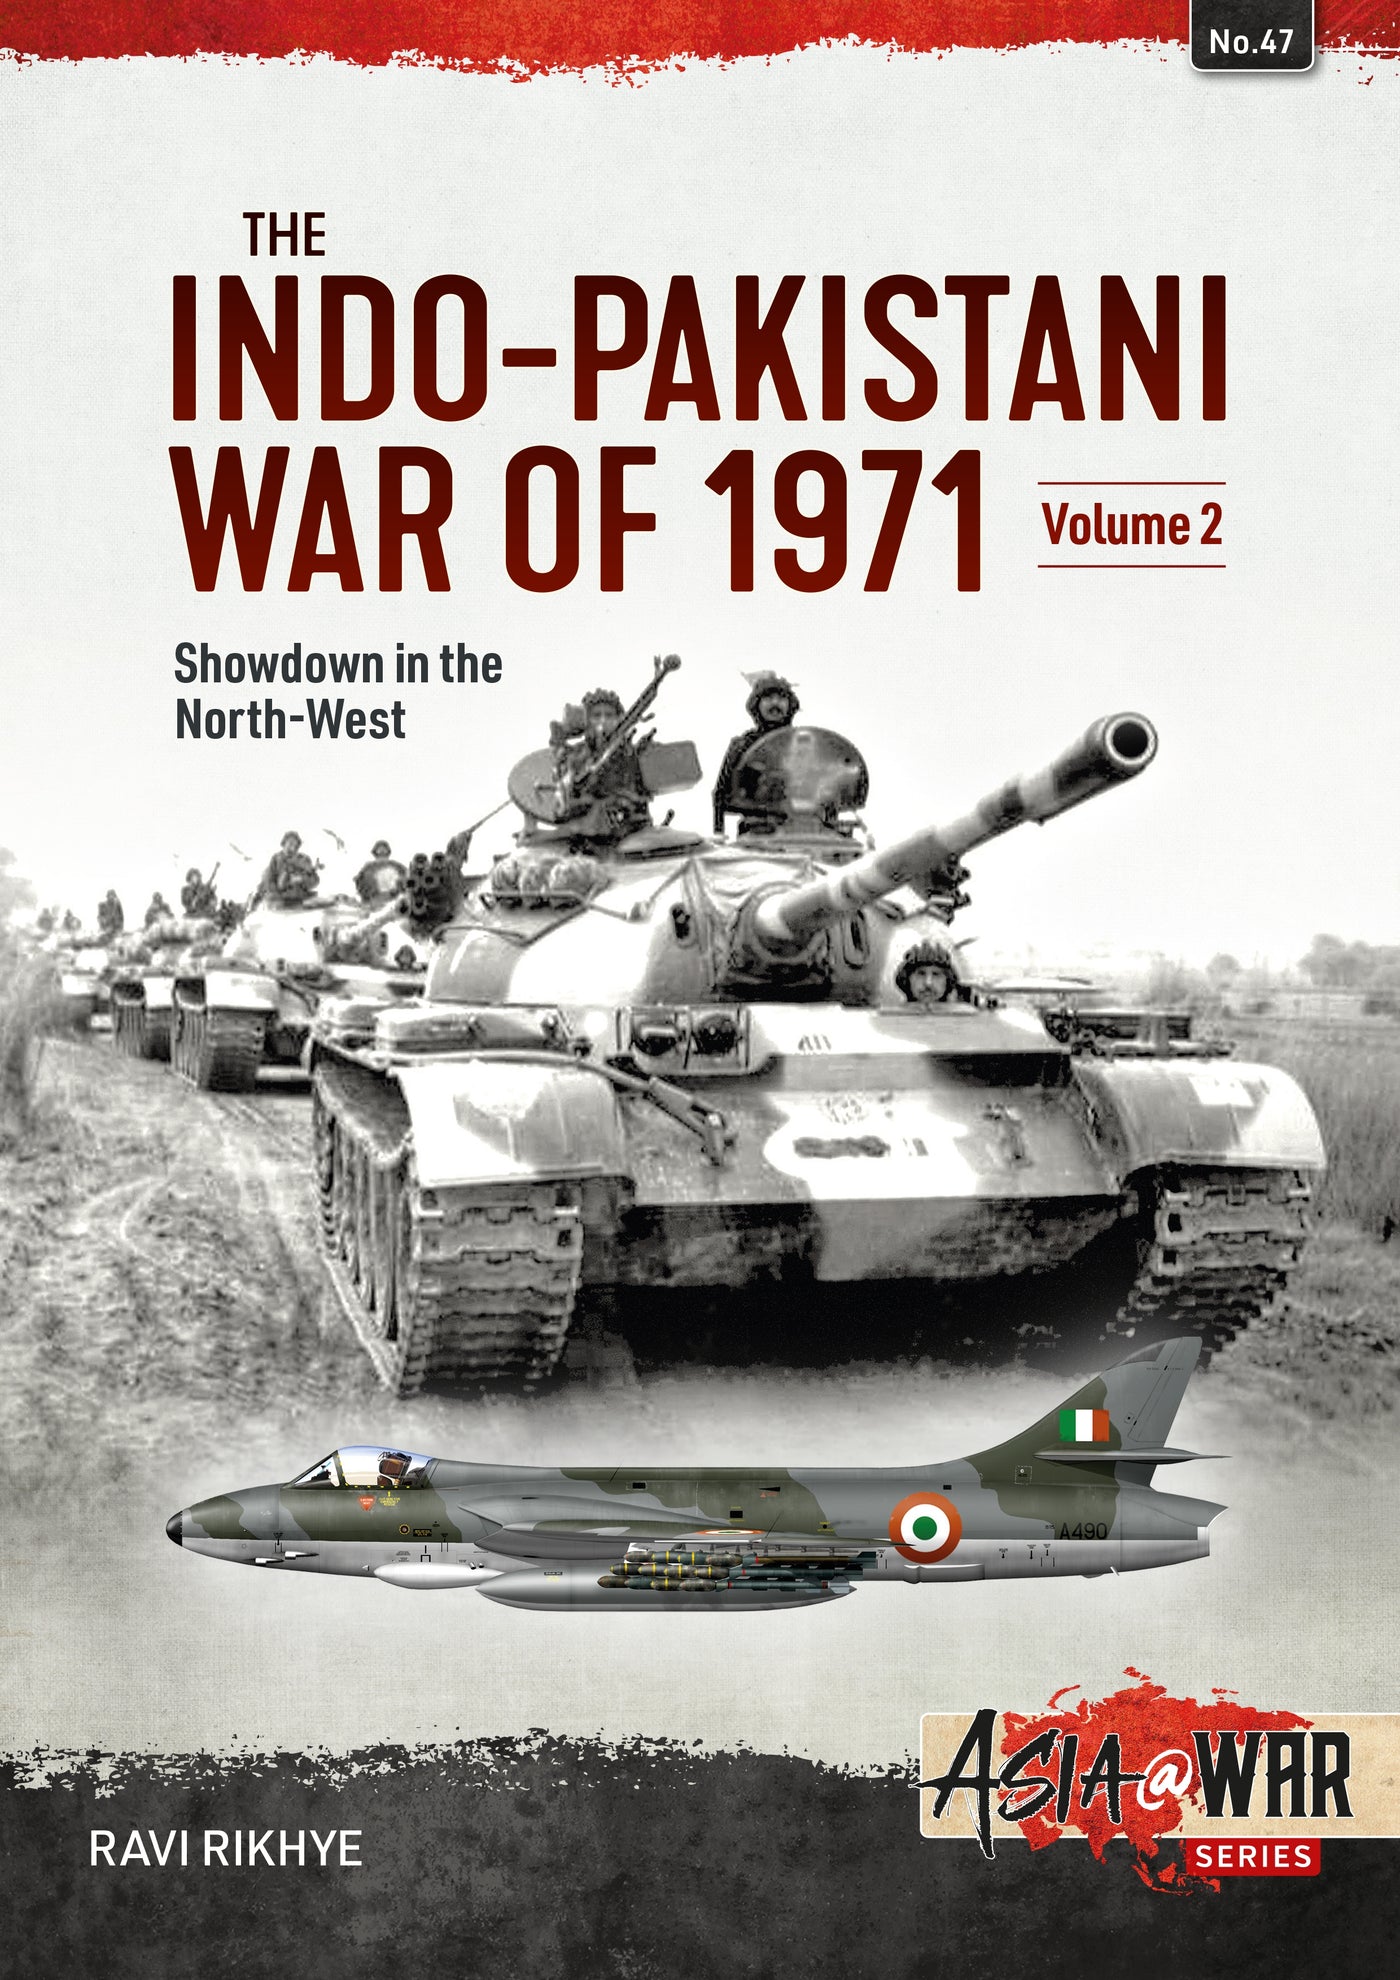 The Indo-Pakistani War of 1971